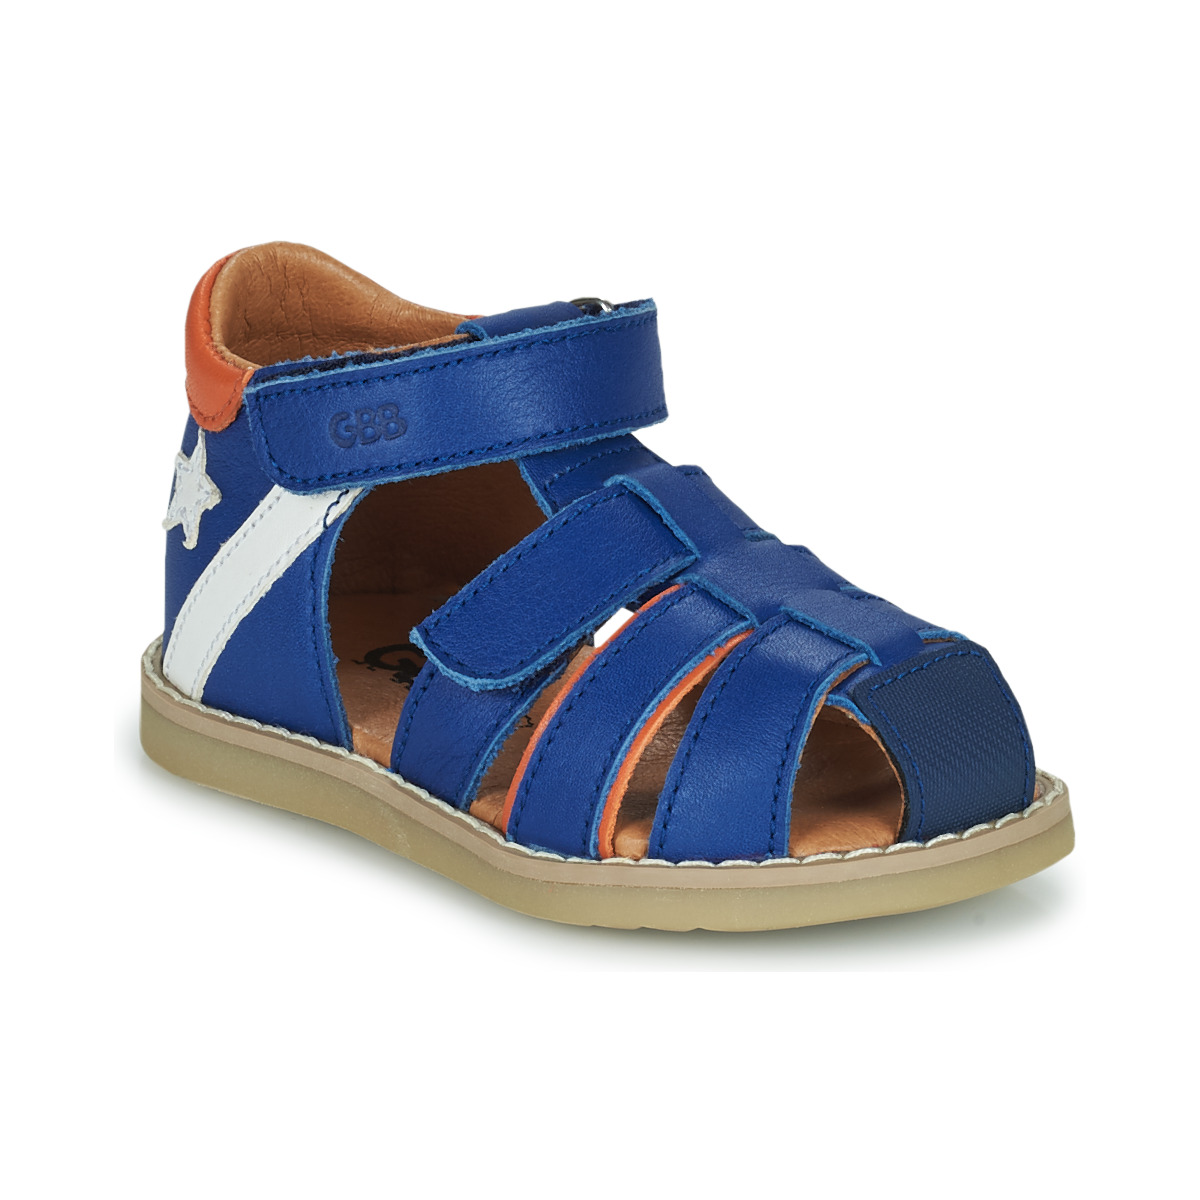 Schoenen Jongens Sandalen / Open schoenen GBB MARTINO Blauw